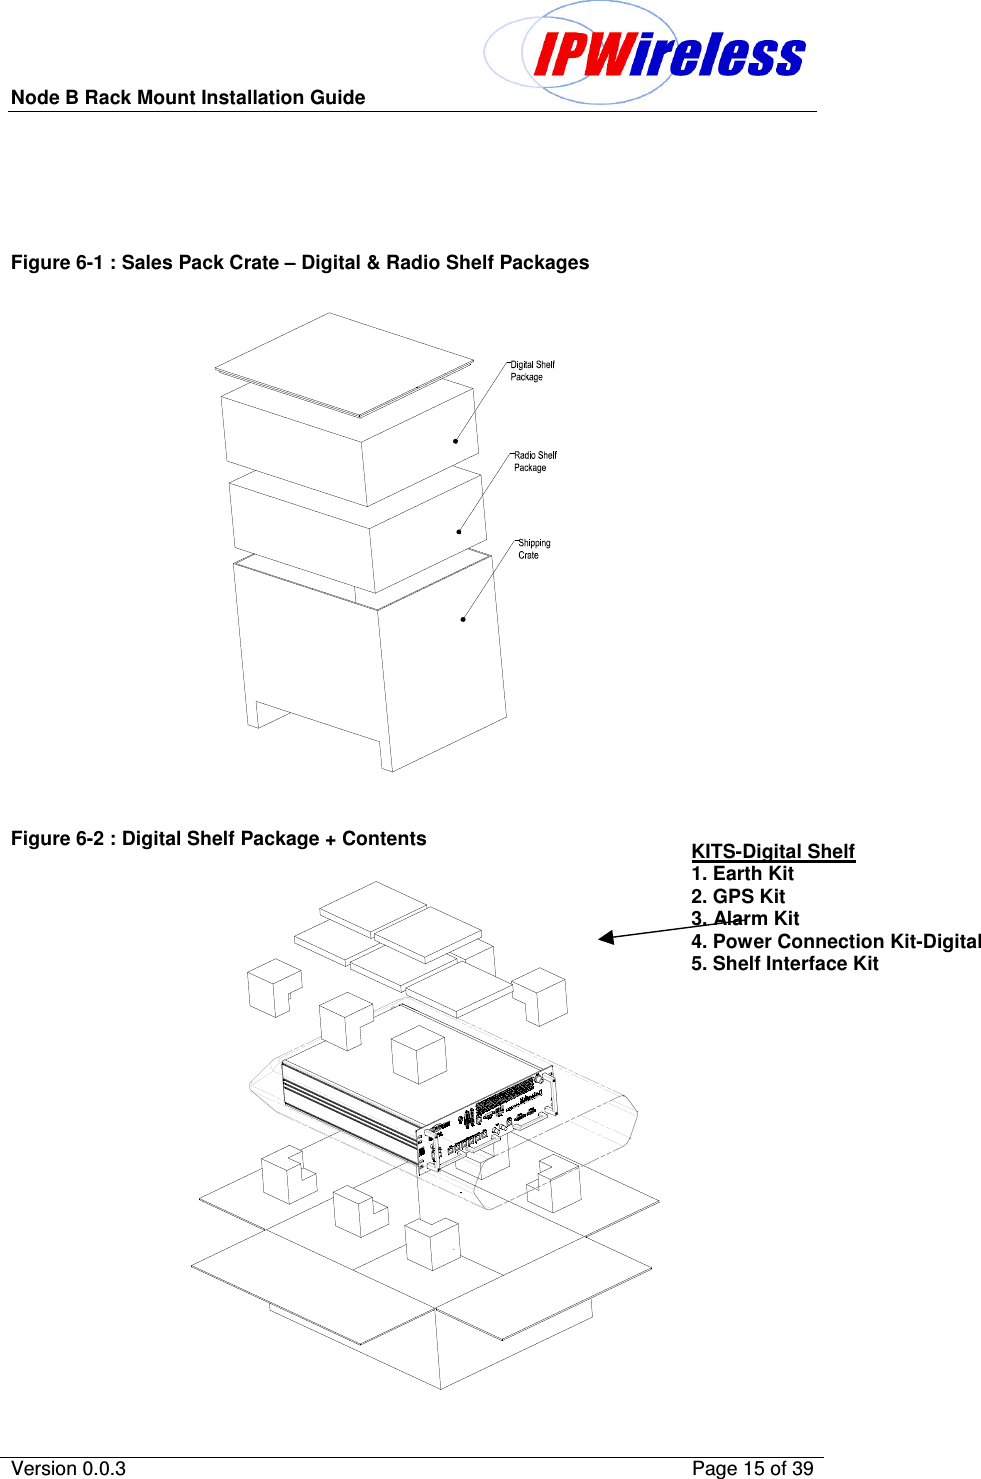 Node B Rack Mount Installation Guide                          Version 0.0.3    Page 15 of 39       Figure 6-1 : Sales Pack Crate – Digital &amp; Radio Shelf Packages    Figure 6-2 : Digital Shelf Package + Contents    KITS-Digital Shelf 1. Earth Kit 2. GPS Kit 3. Alarm Kit 4. Power Connection Kit-Digital 5. Shelf Interface Kit 